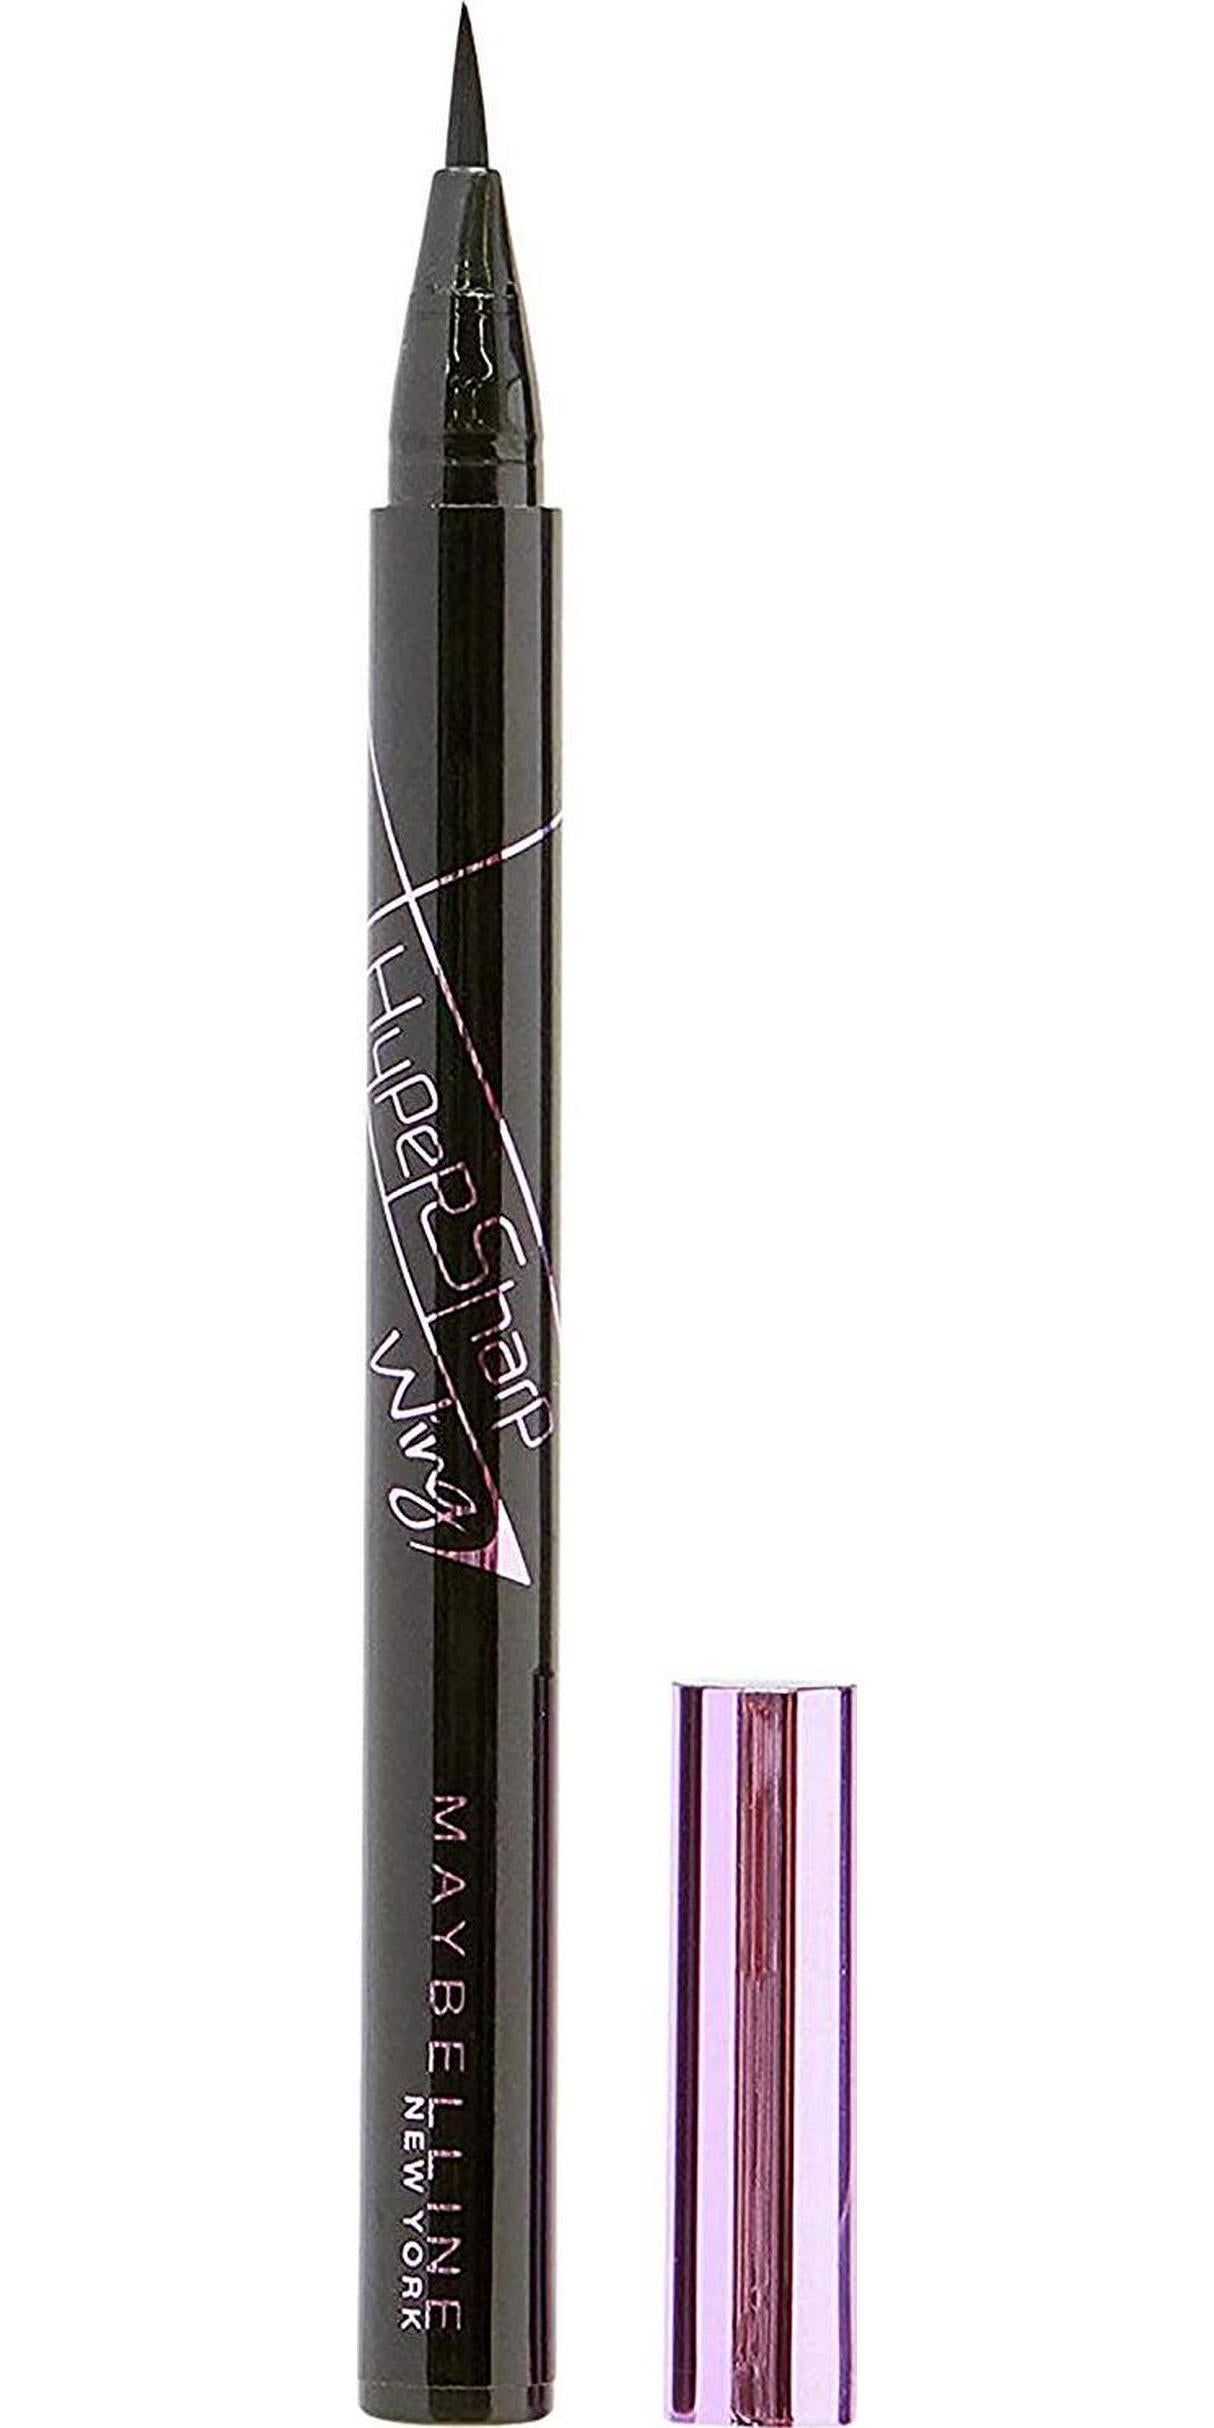 Maybelline, Maybelline HyperSharp Wing Liquid Eyeliner - Black,0.5g